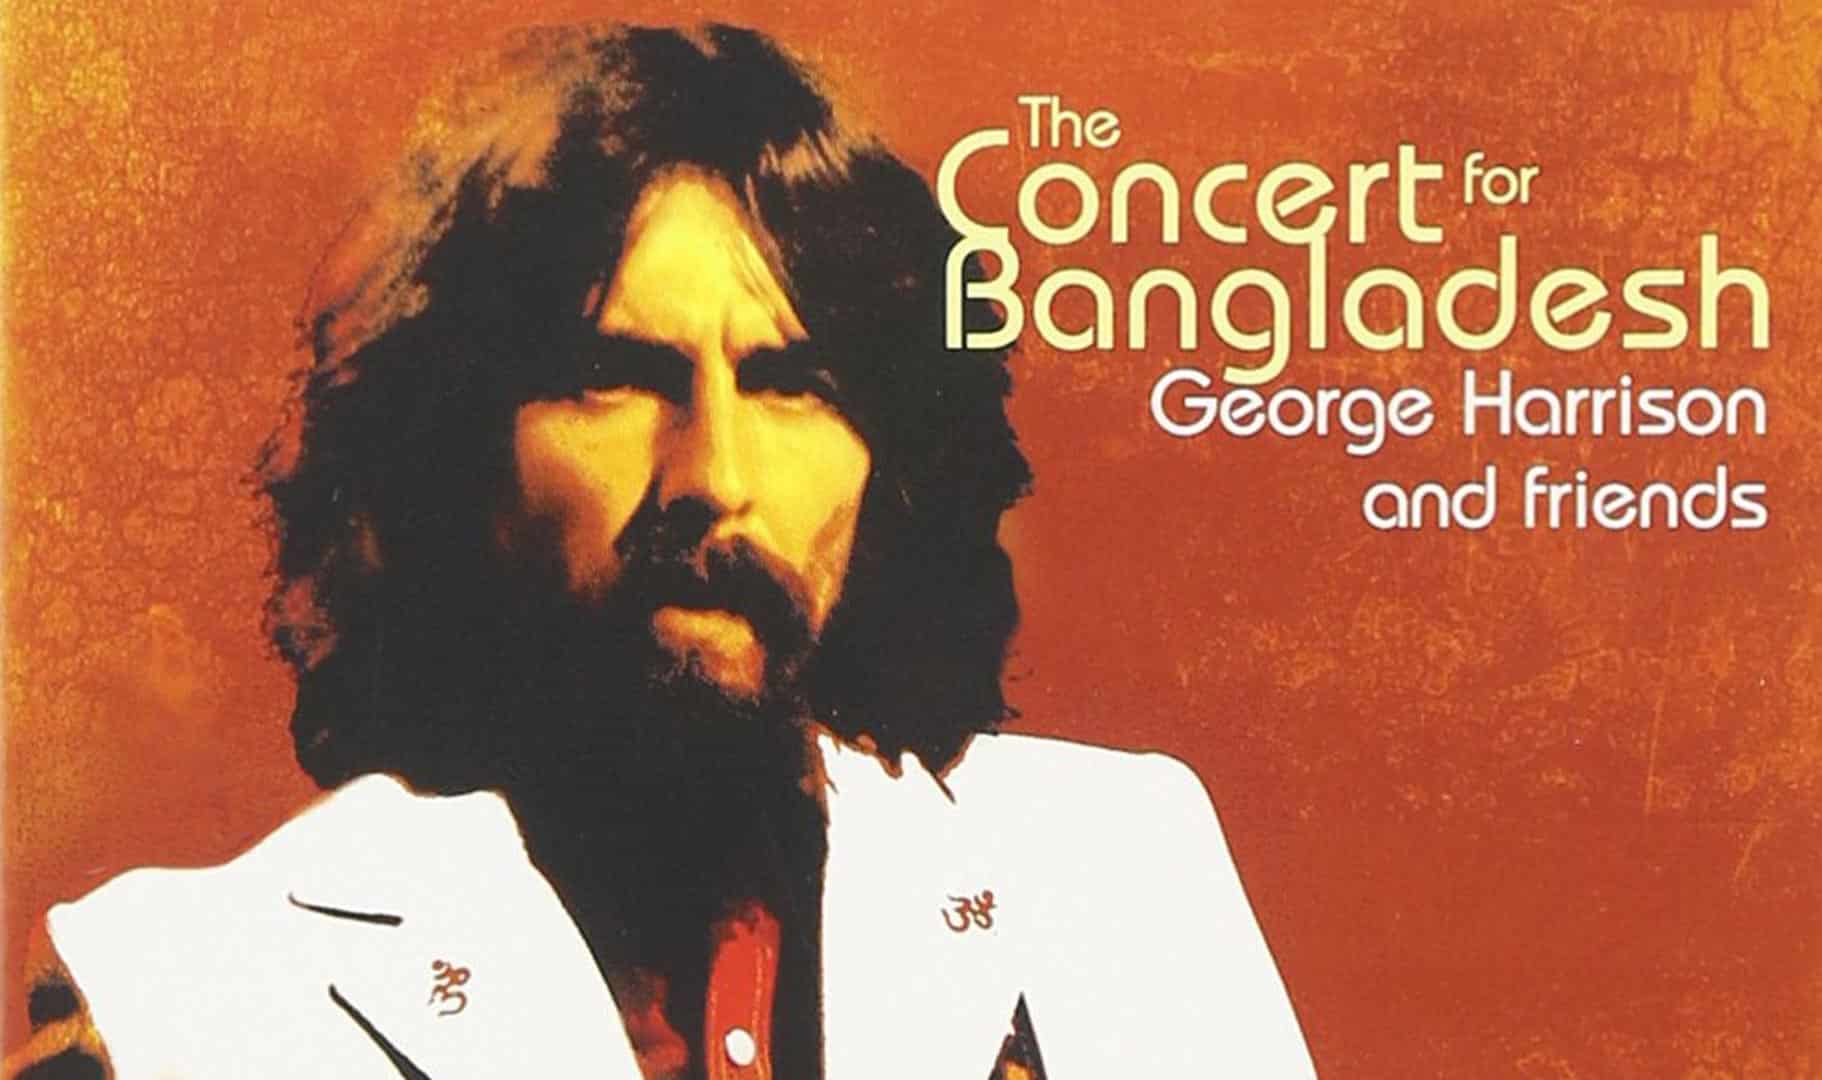 George Harrison's concert for Bangladesh